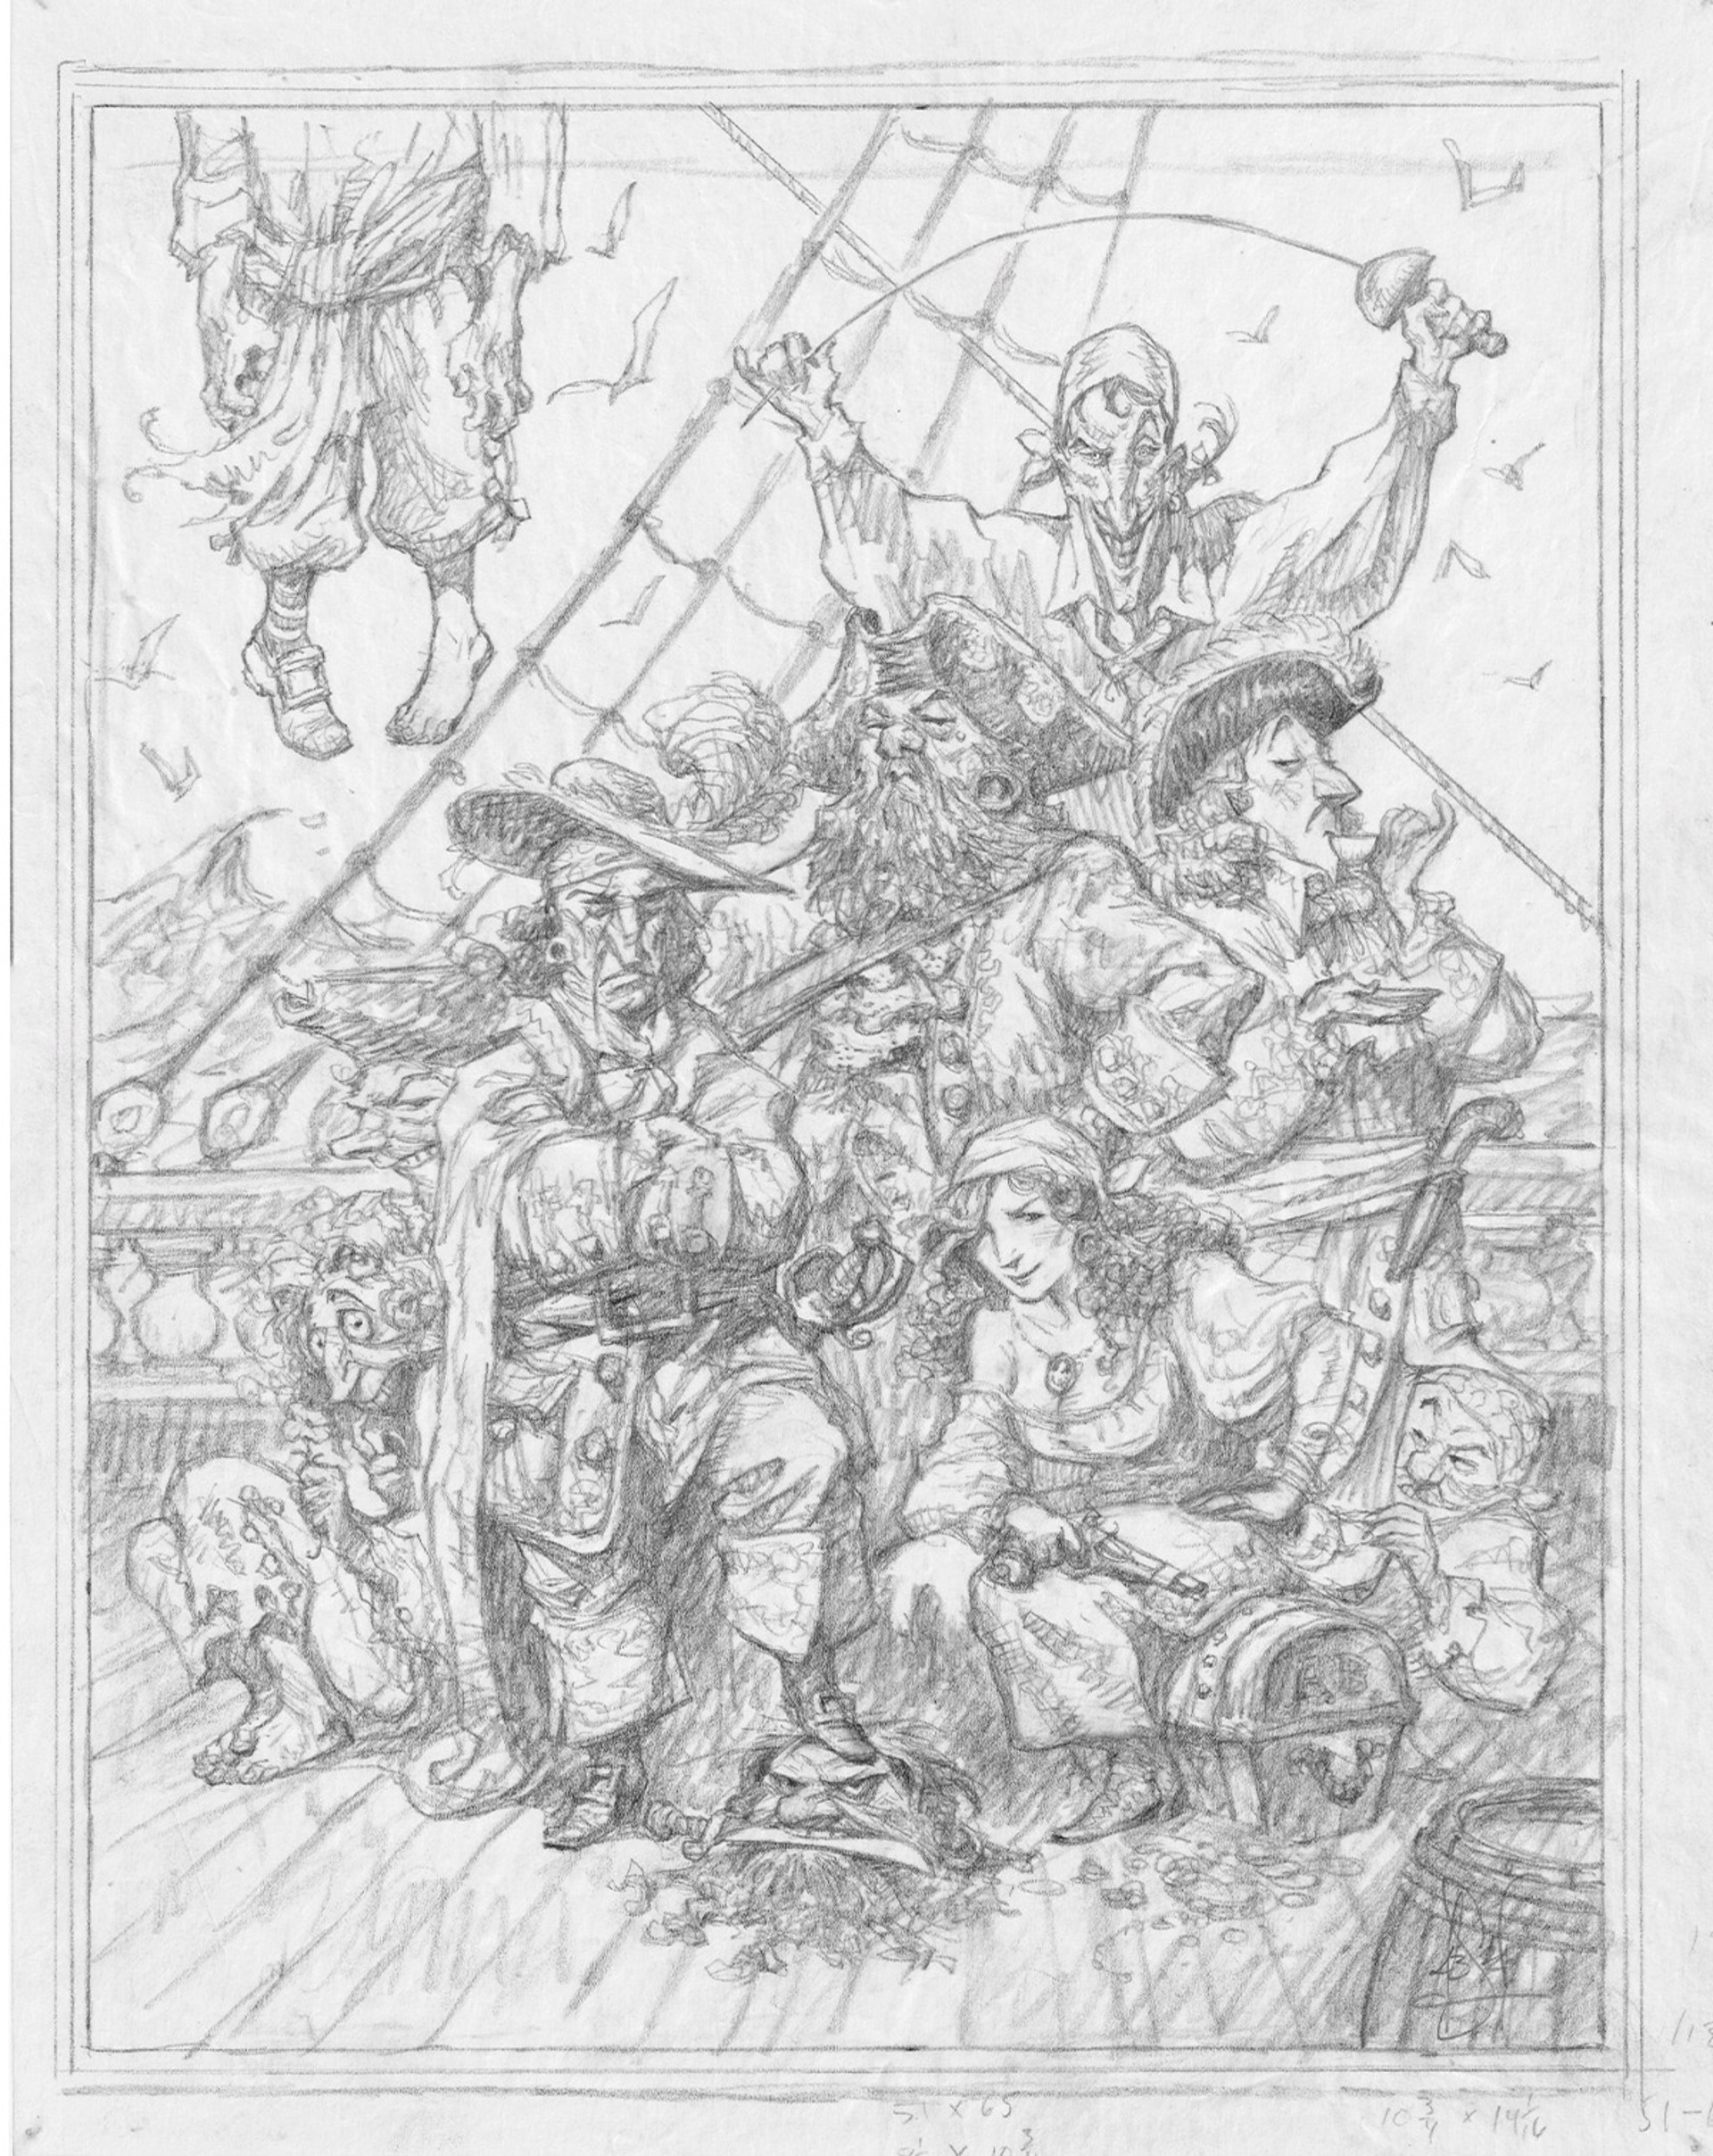 Pirates by Peter de Sève